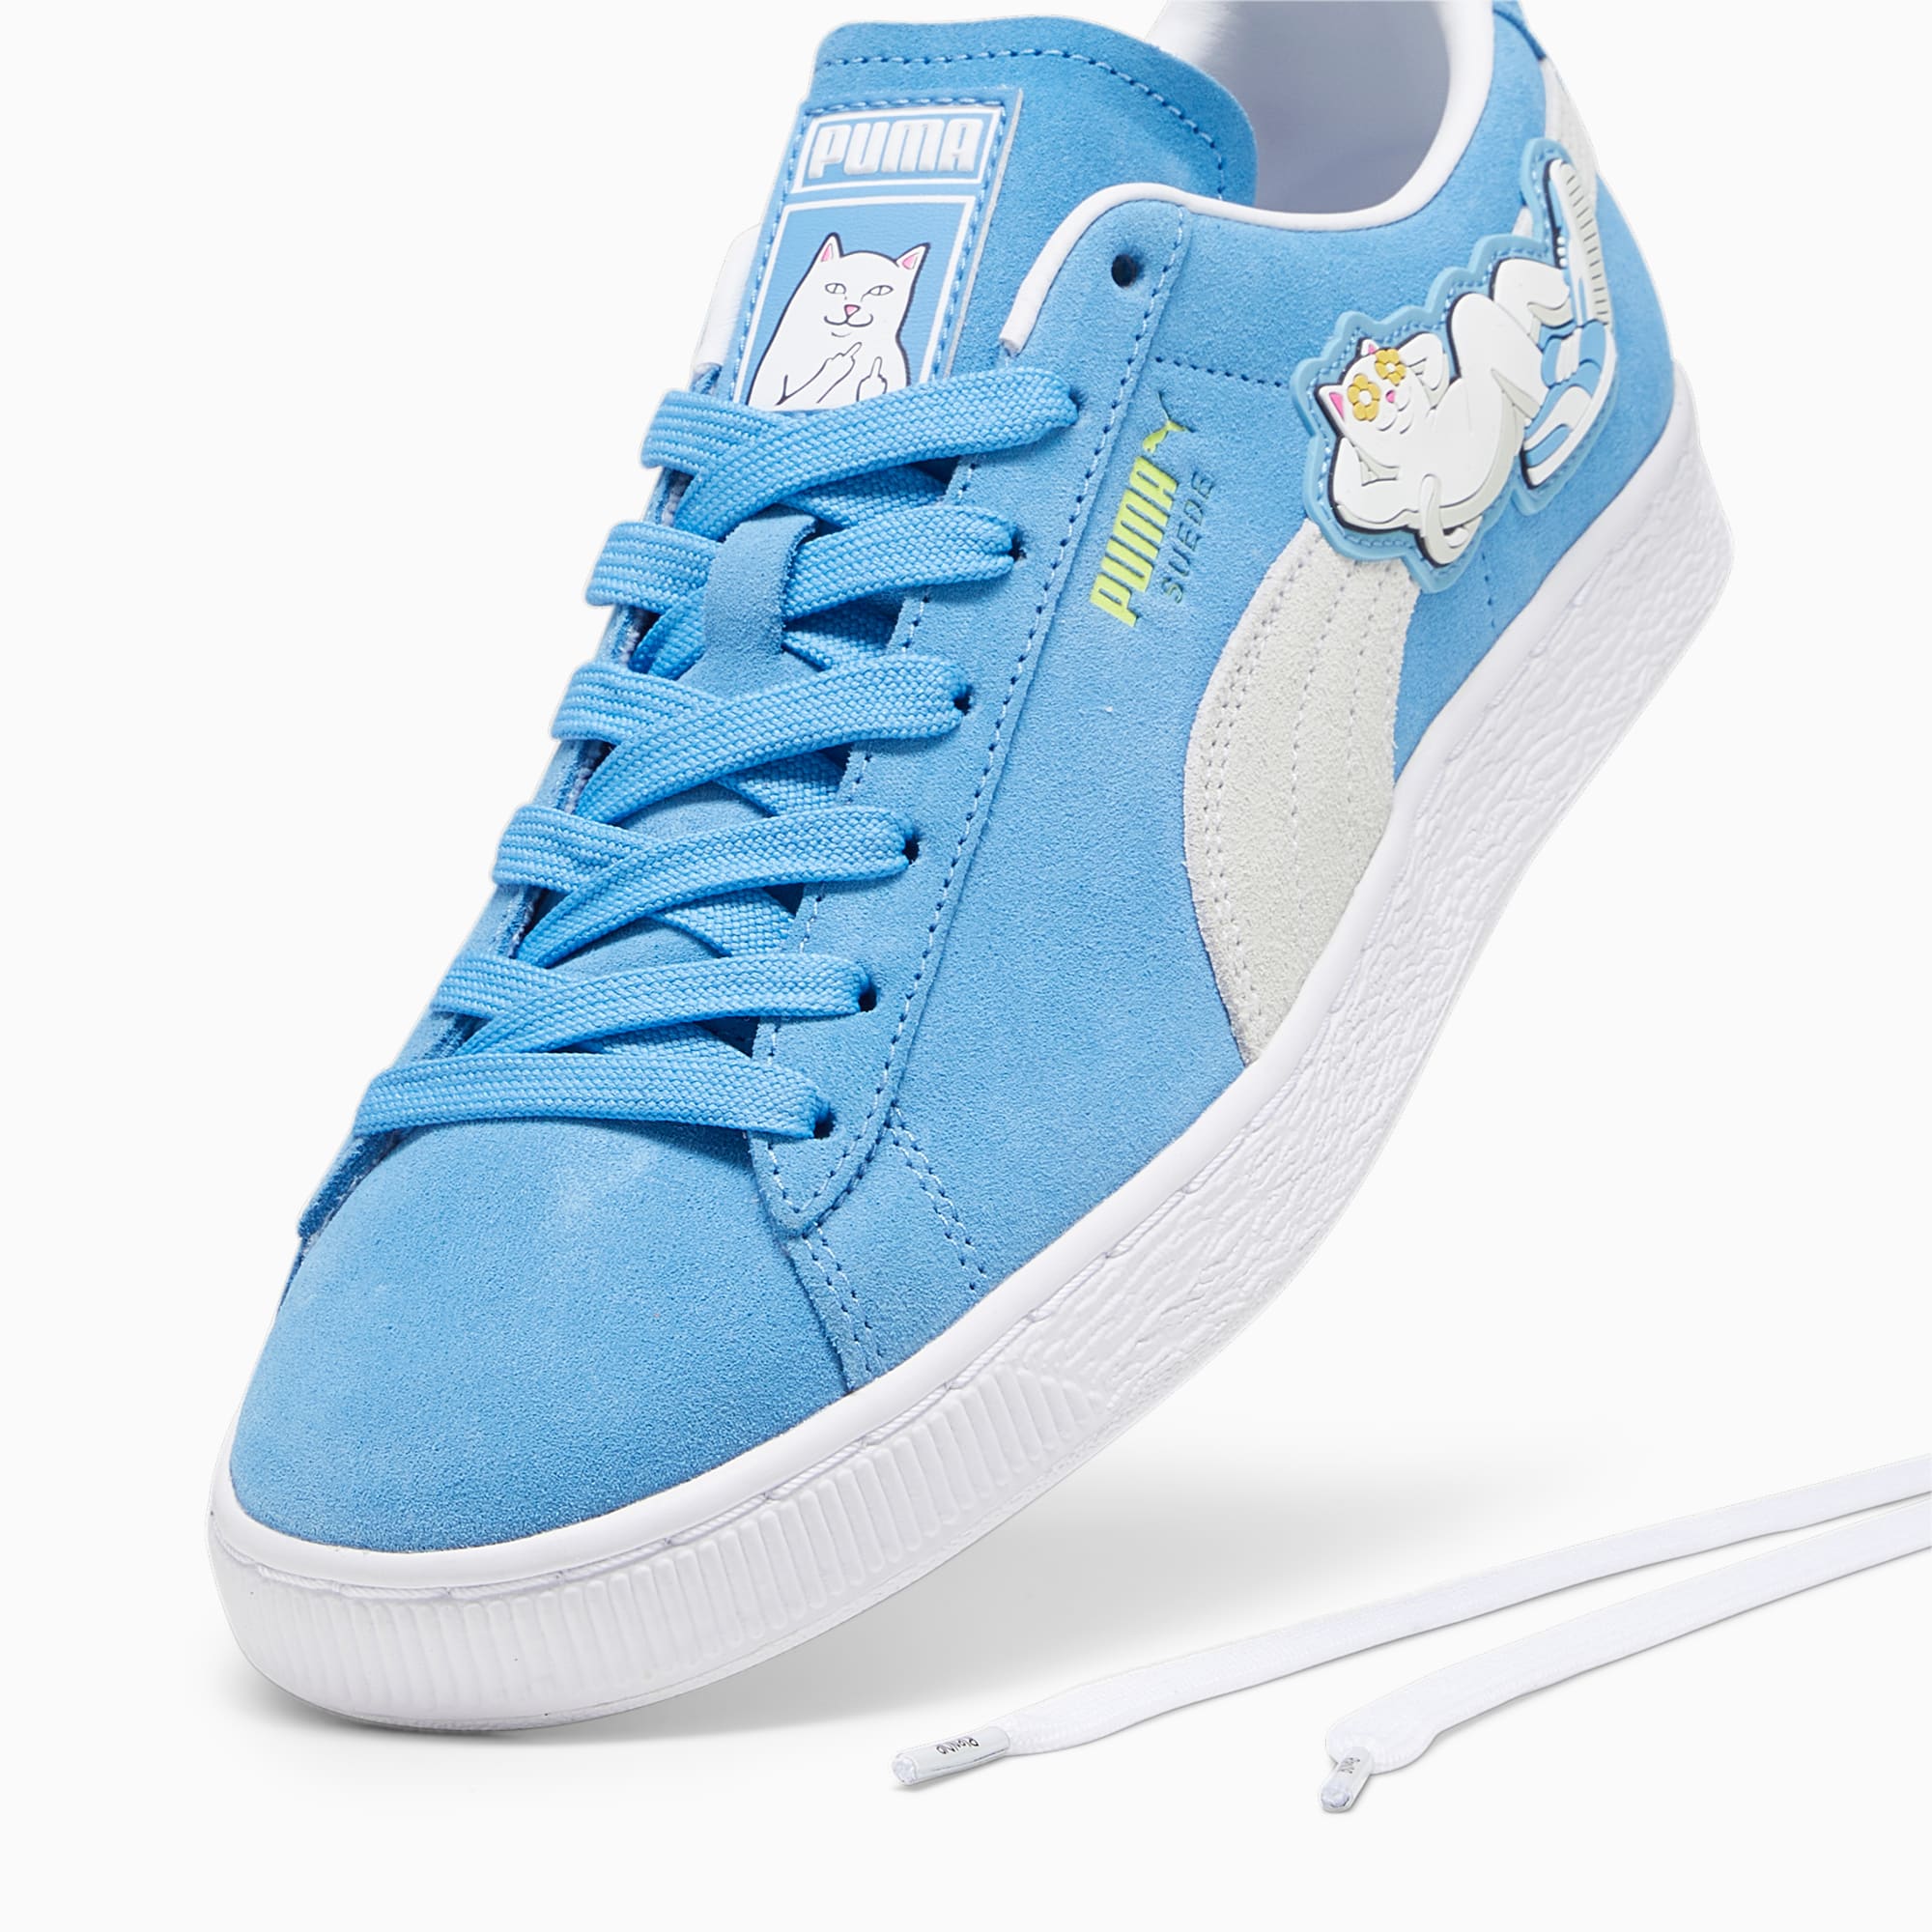 Women's PUMA X Ripndip Suede Blue Sneakers, Regal Blue/White, Size 35,5, Shoes